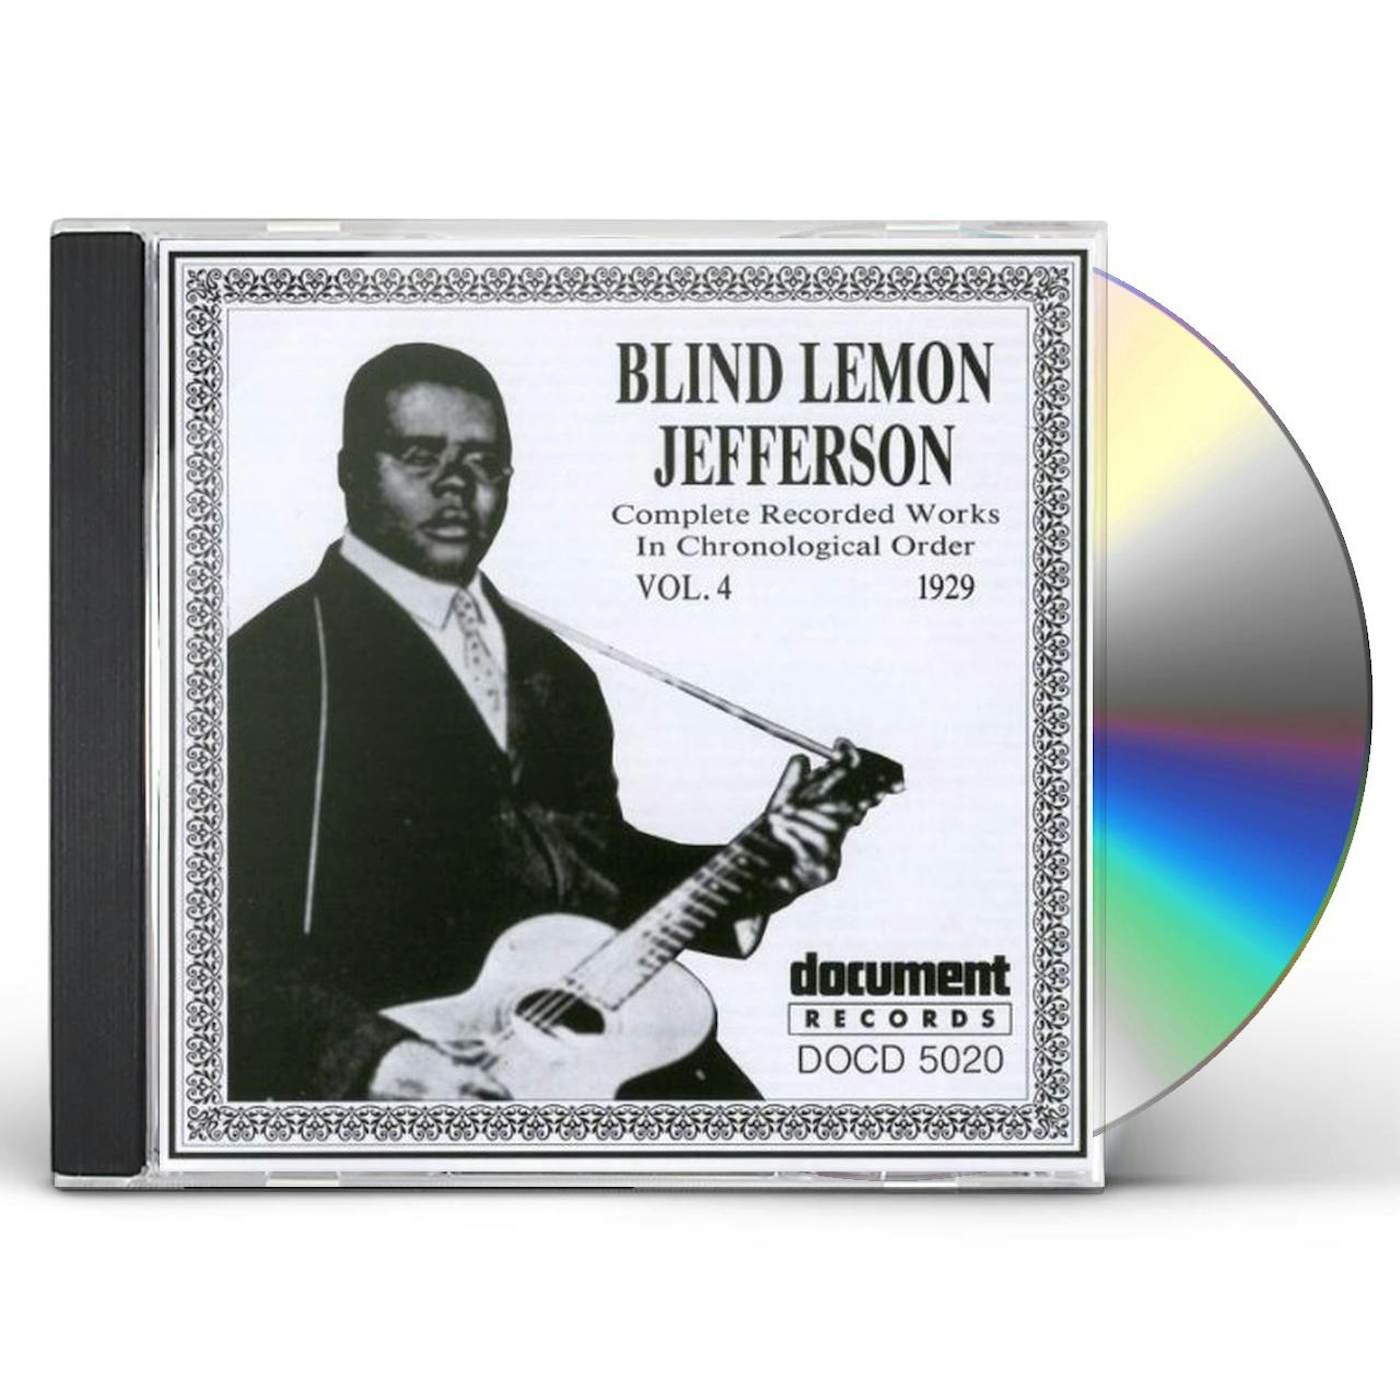 Blind Lemon Jefferson COMPLETE RECORDINGS 1925-1929 VOL. 4 (1929) CD